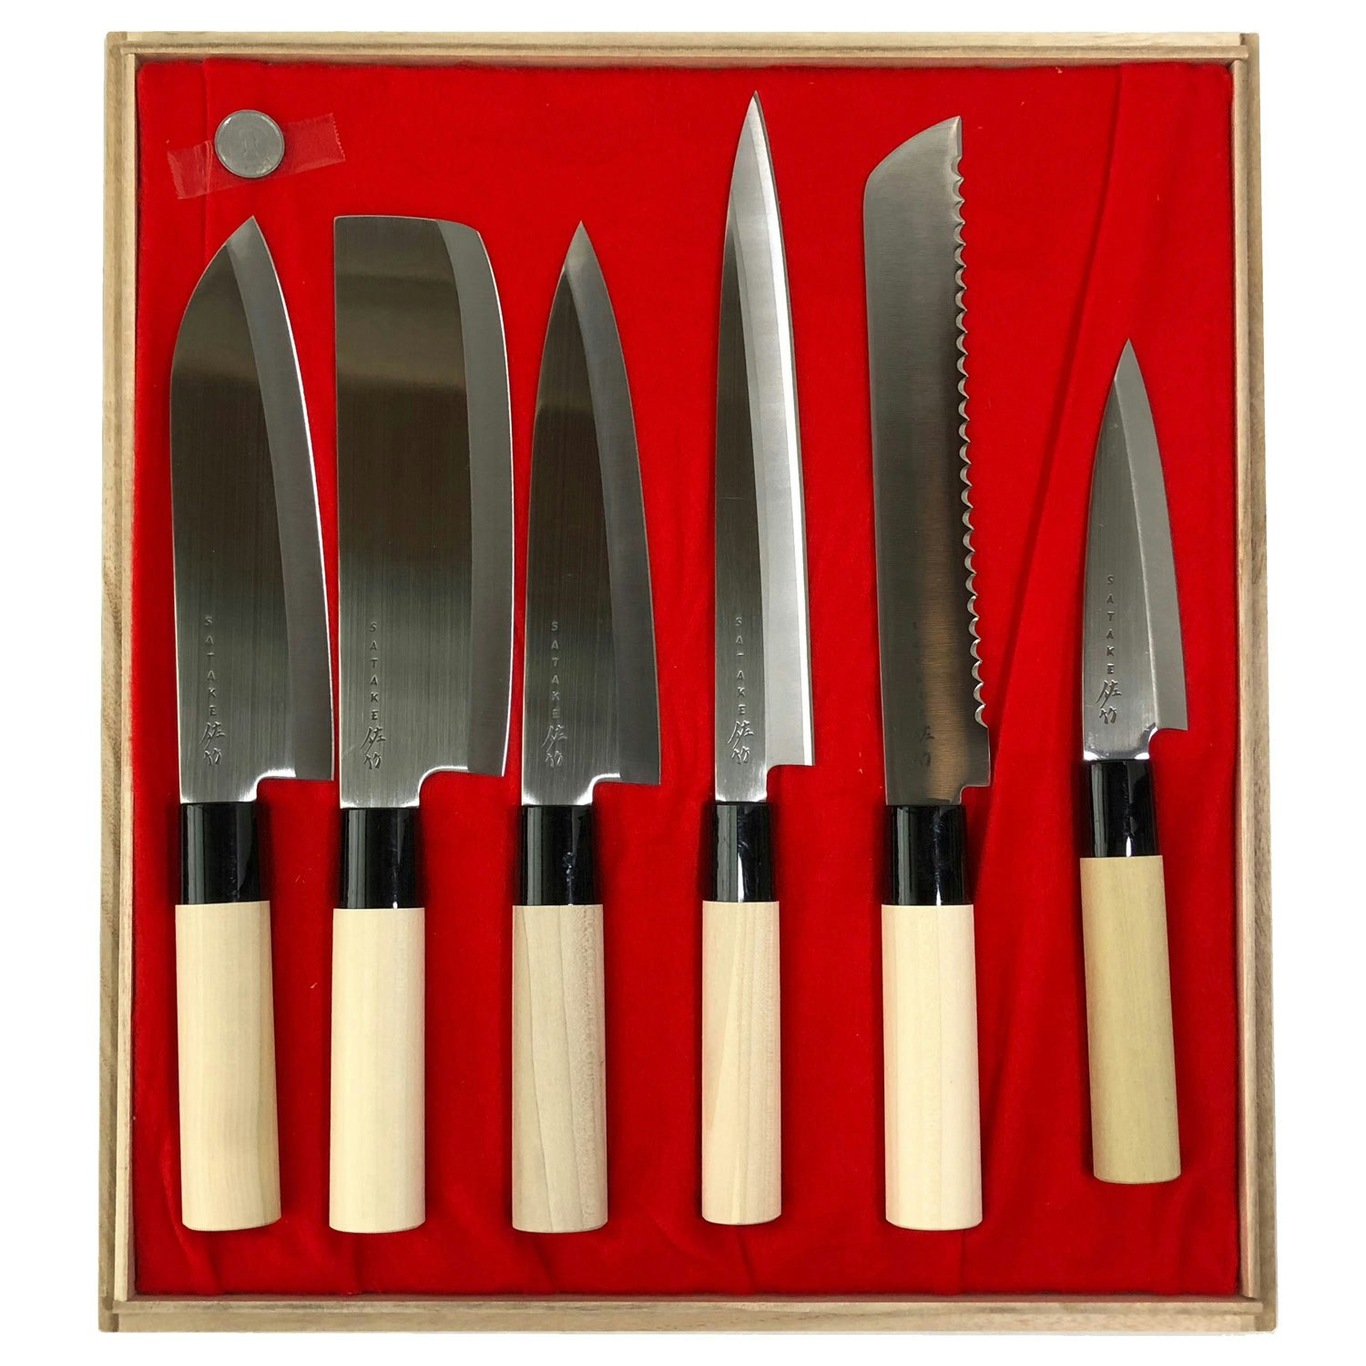 https://royaldesign.com/image/2/satake-houcho-knife-set-6-pieces-2?w=800&quality=80